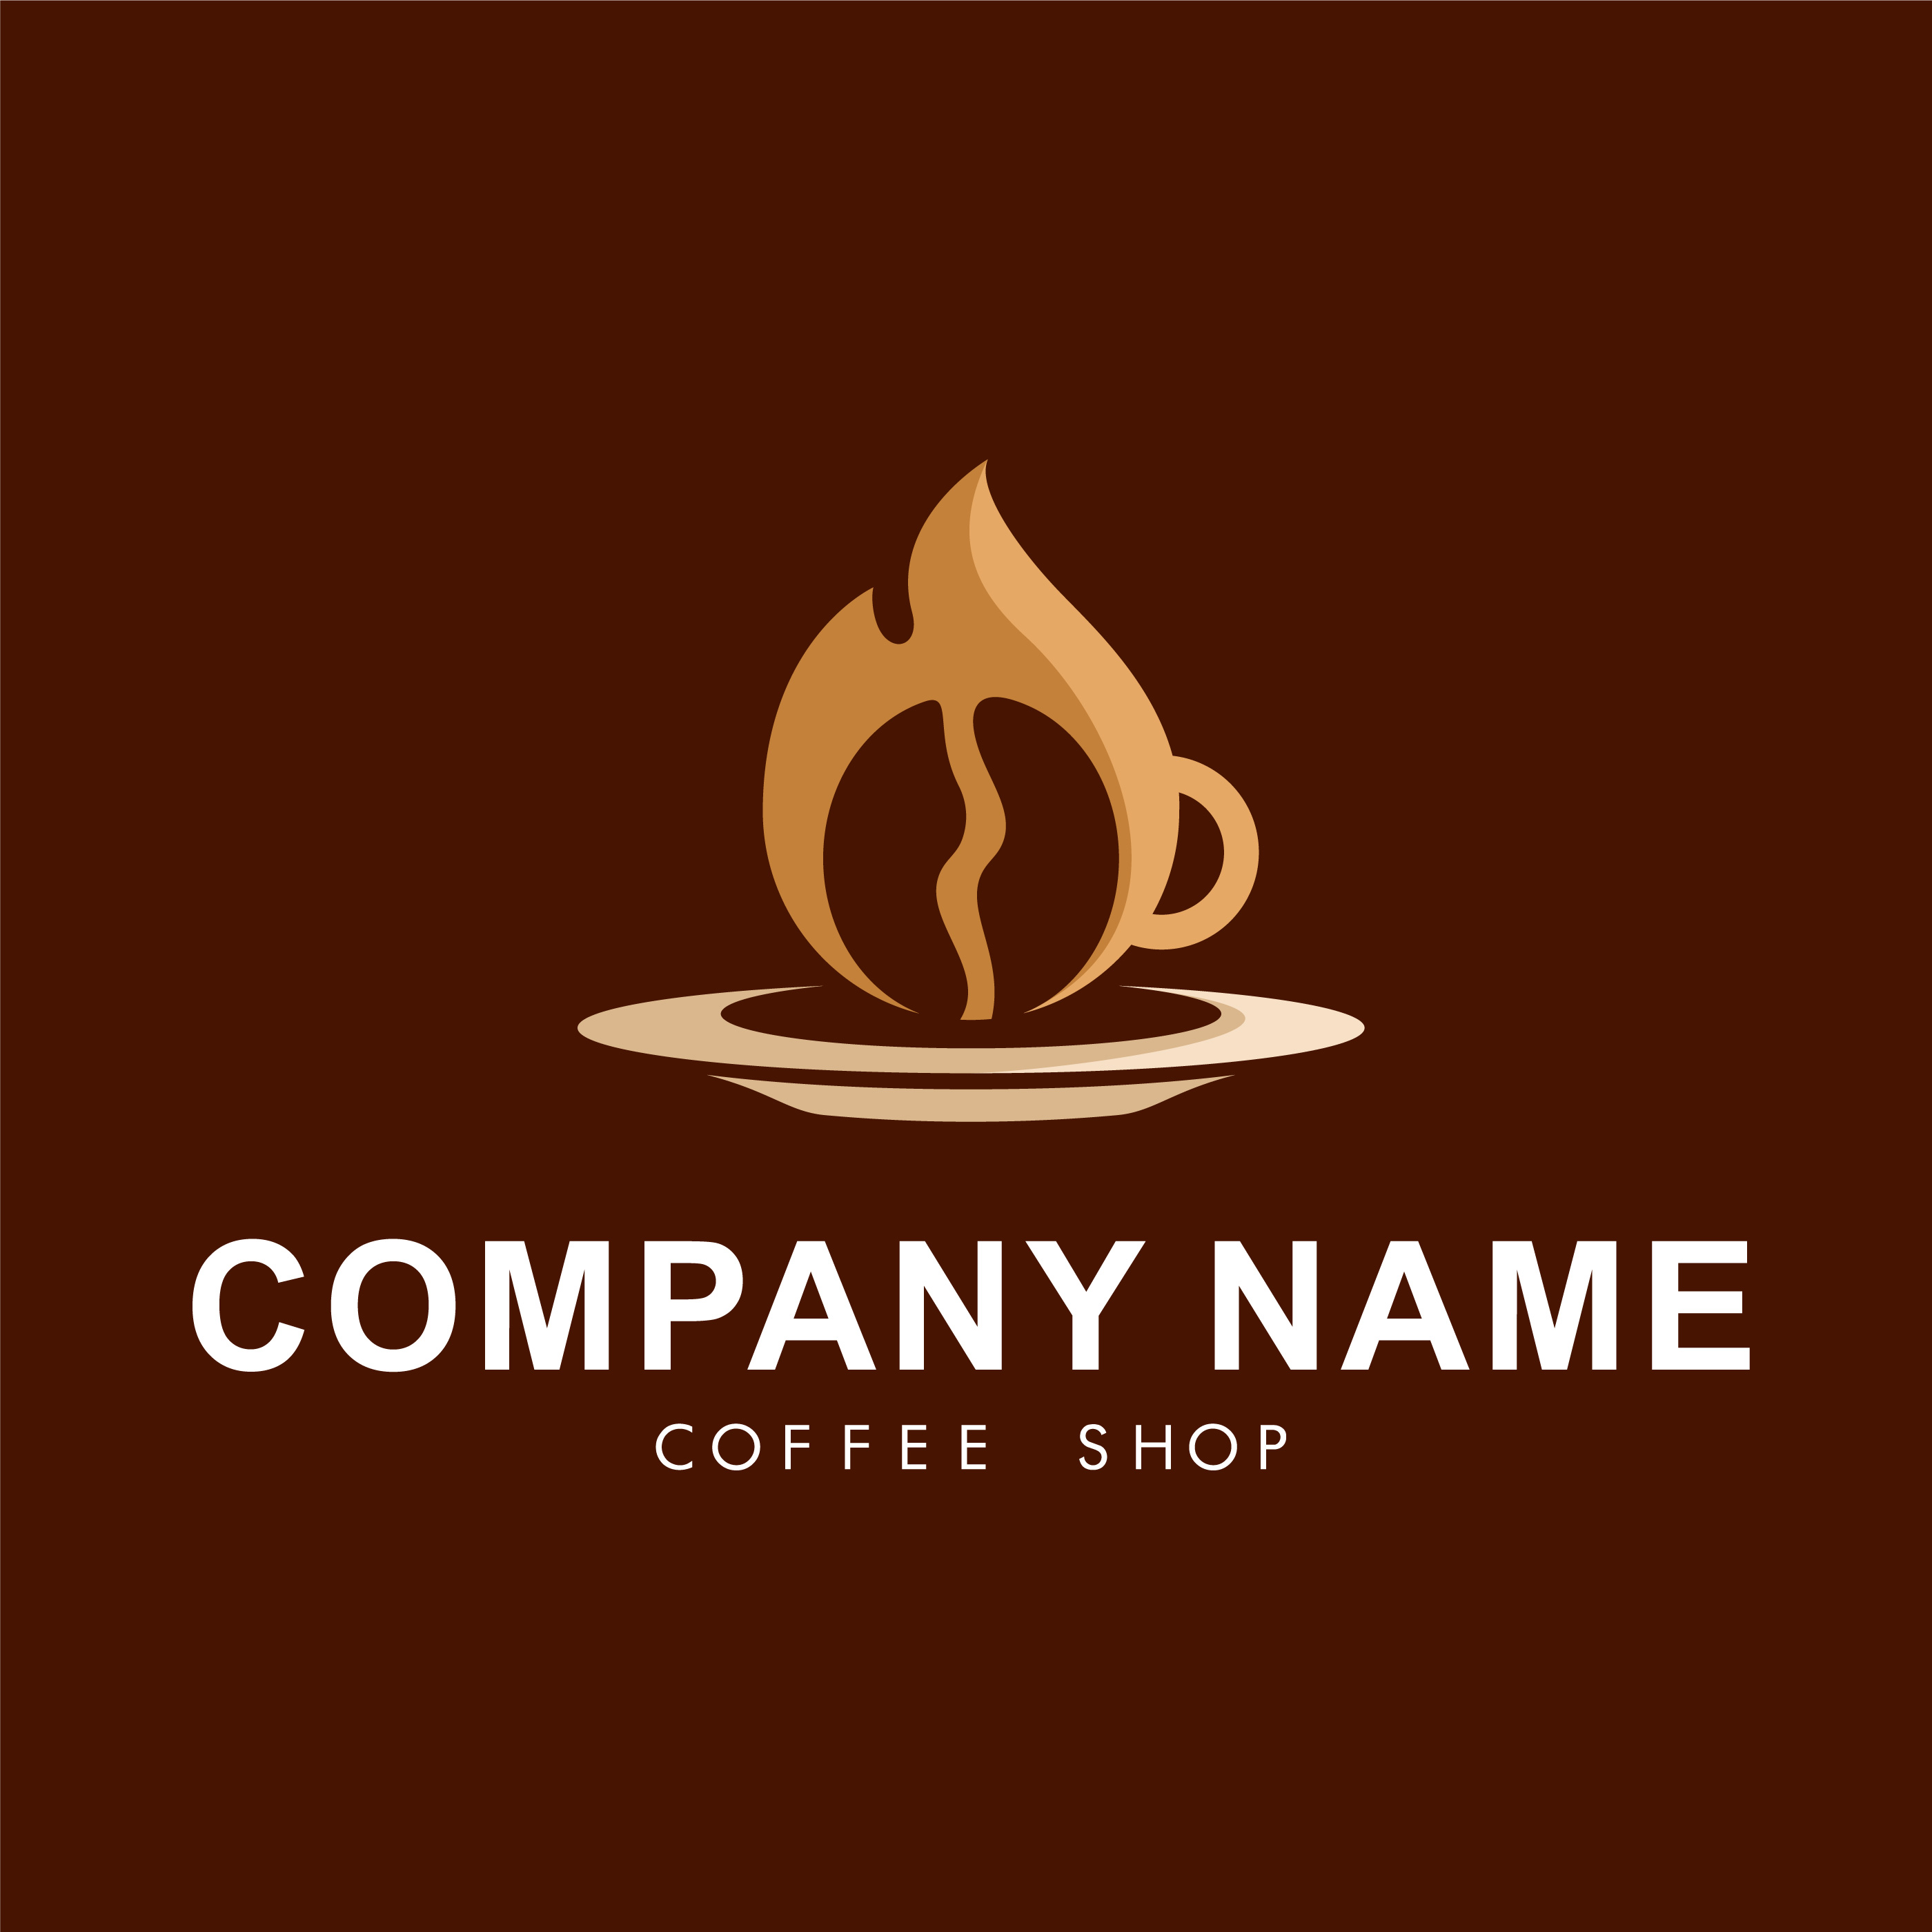 Download Coffee Shop Logo Template - Download Free Vectors, Clipart ...